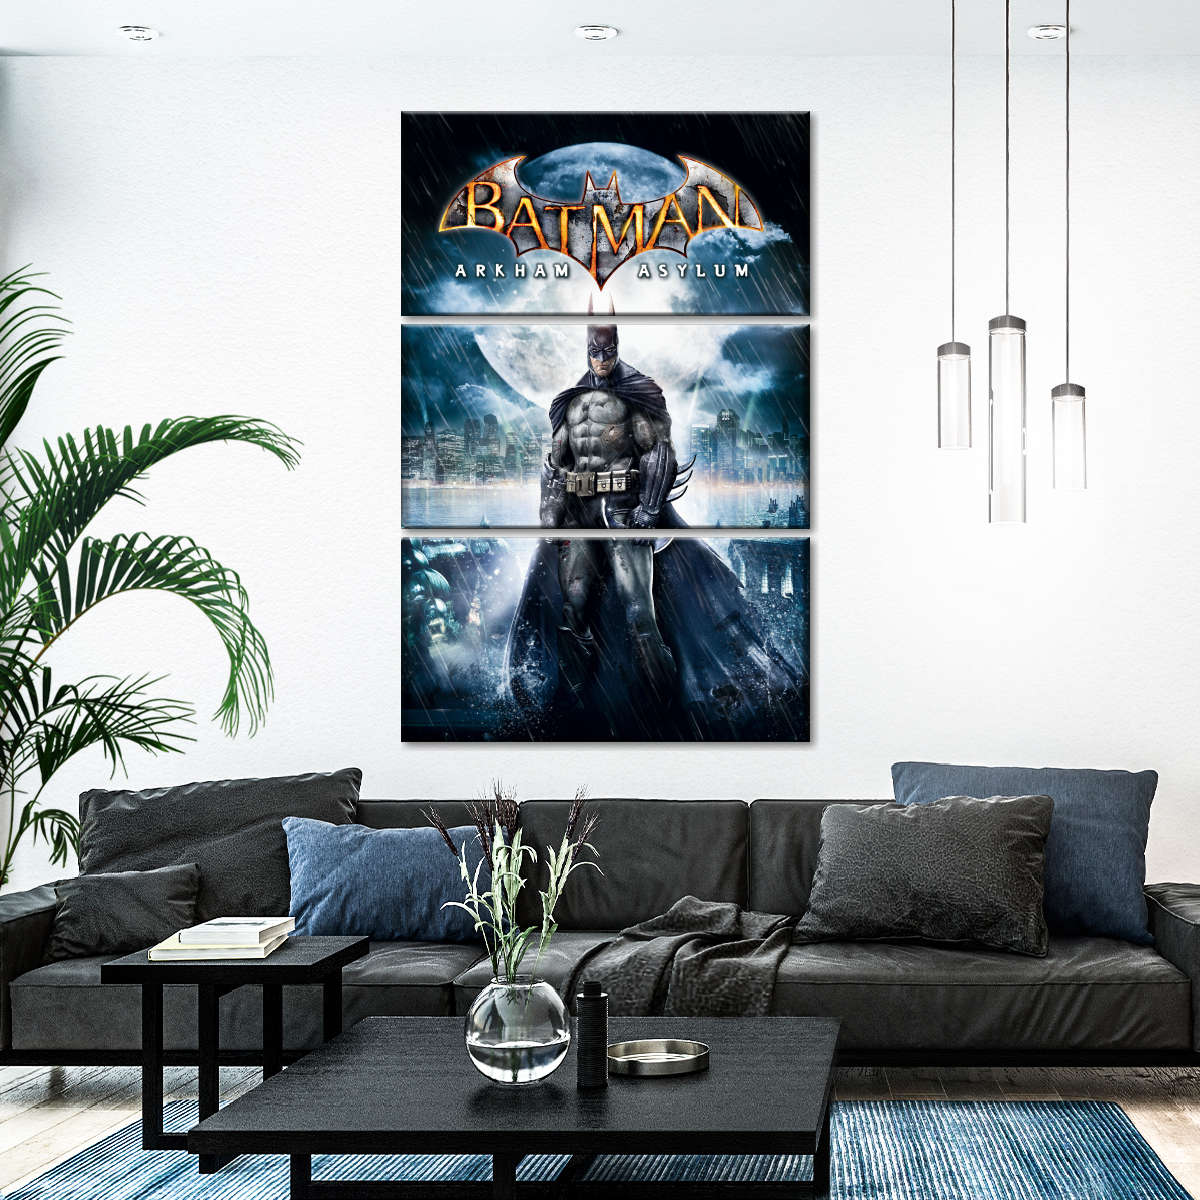 Batman Arkham Asylum Wall Art | Digital Art